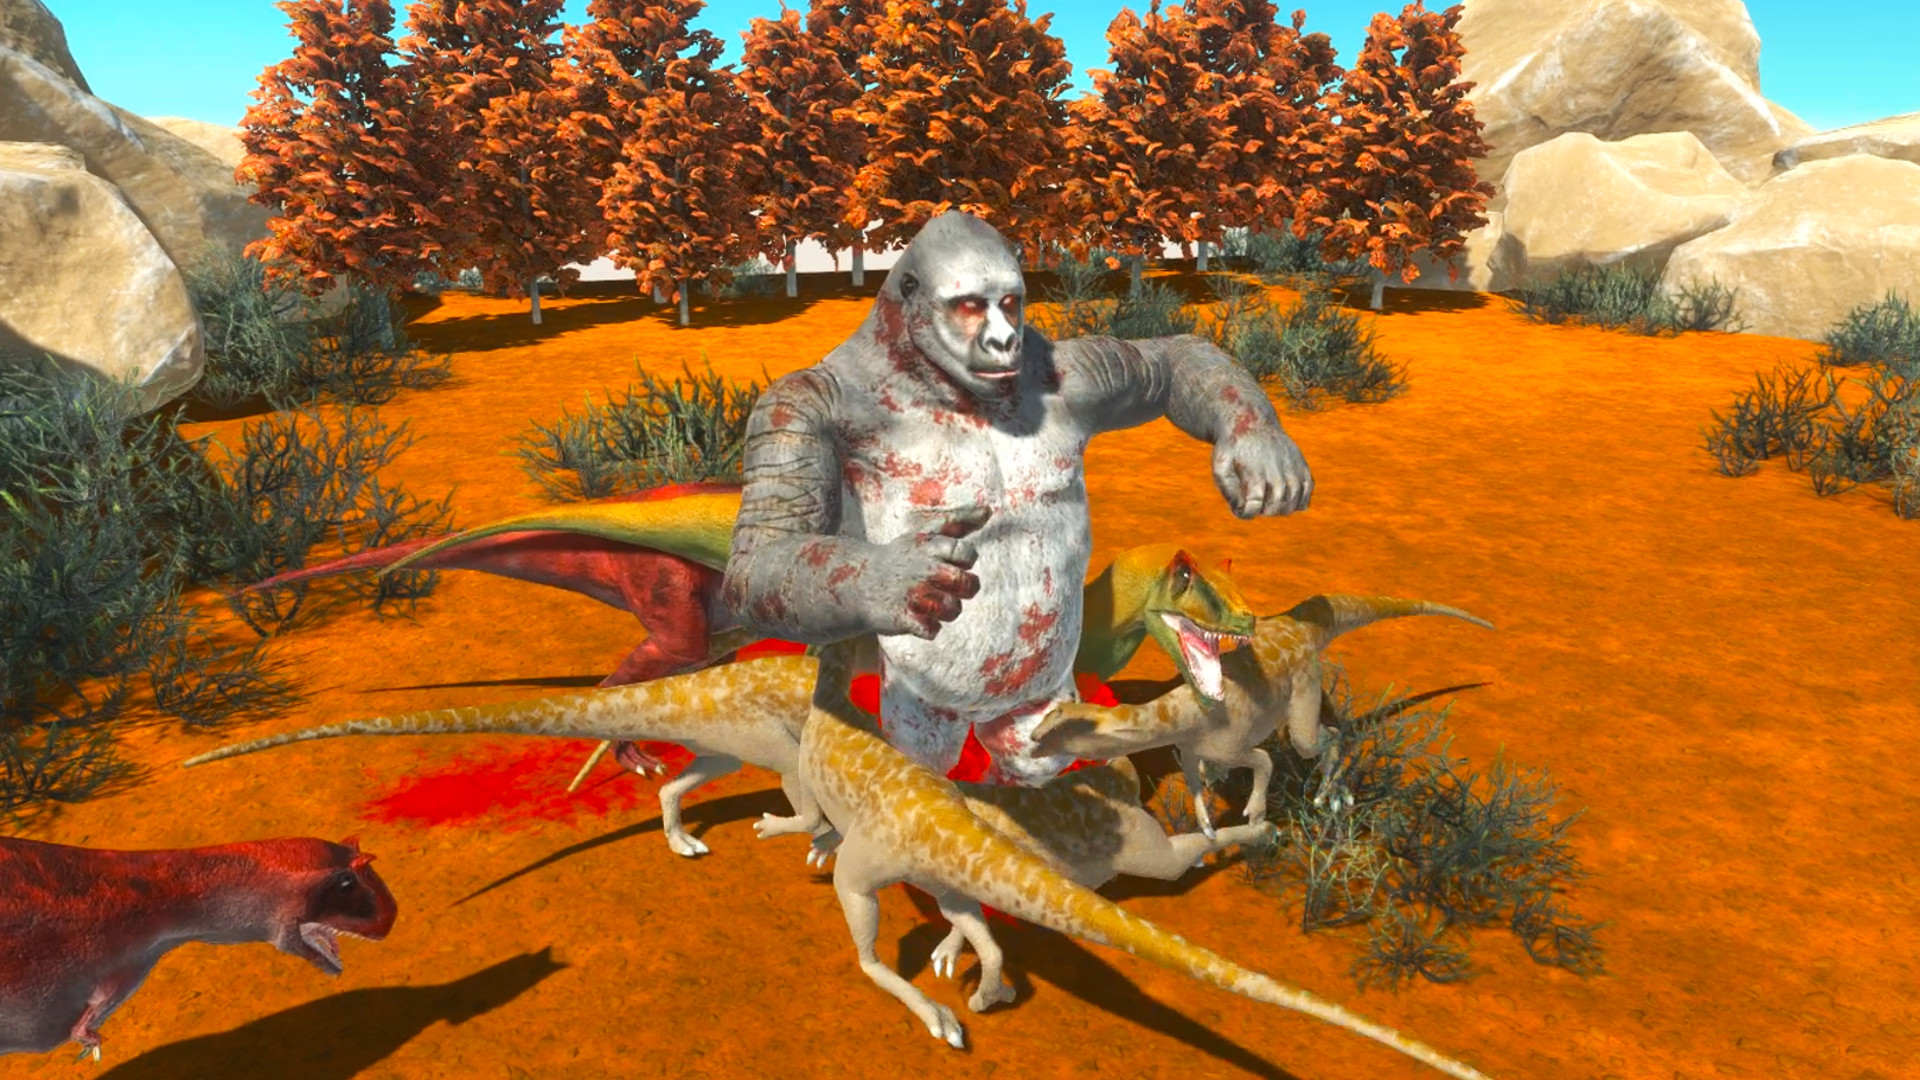 animal revolt battle simulator free game